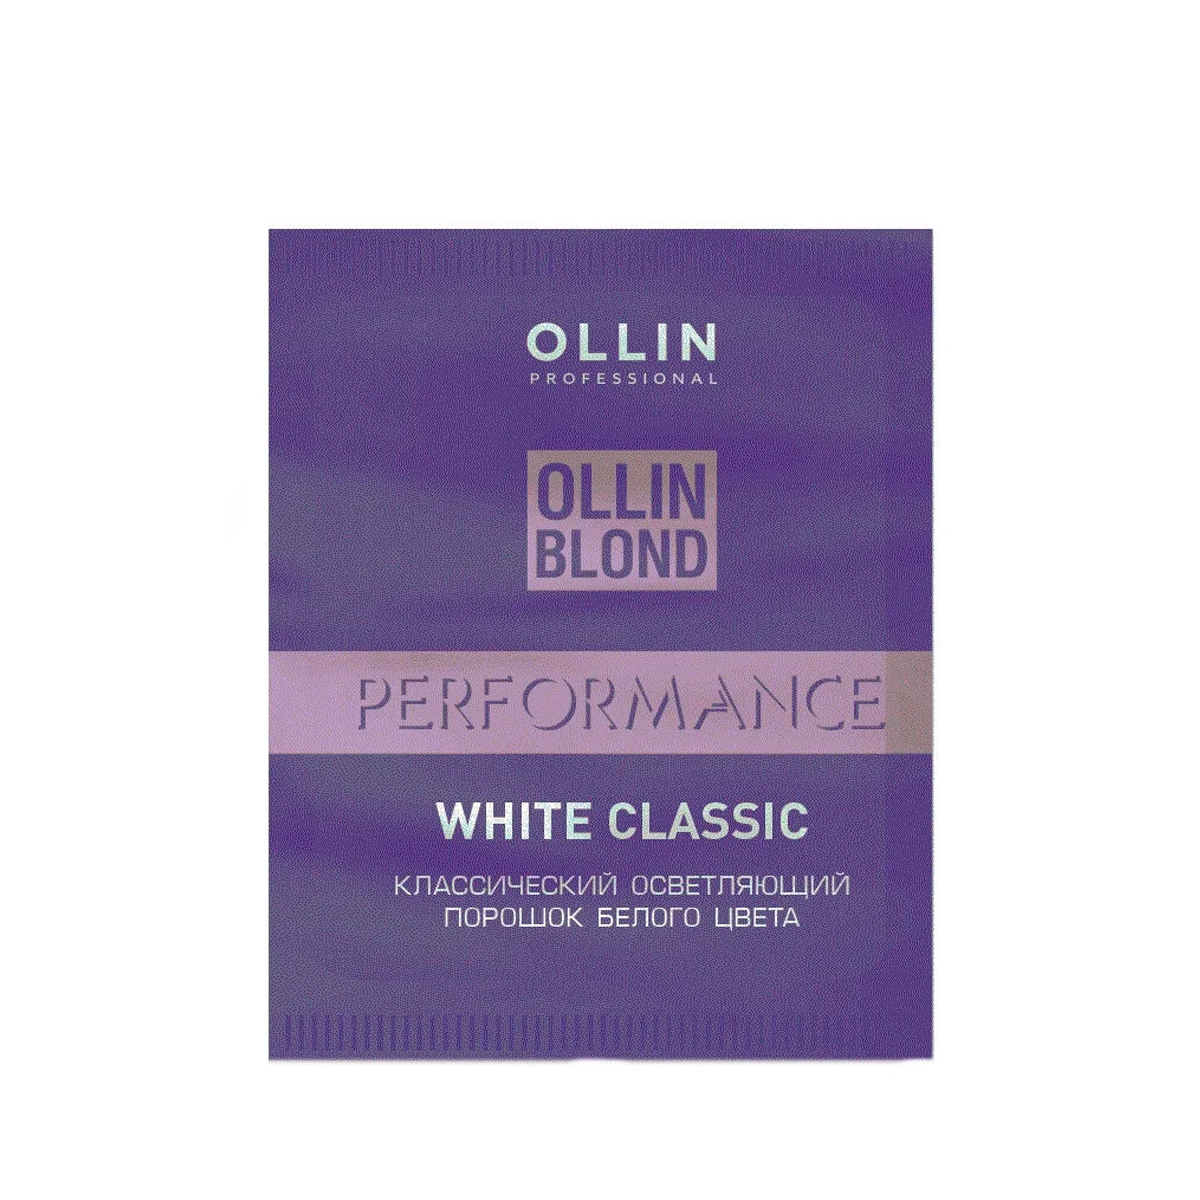 Ollin, Классический осветляющий порошок белого цвета BLOND PERFOMANCE White Classic, 30 г. ollin blond performance white classic классический осветляющий порошок белого а 500 гр